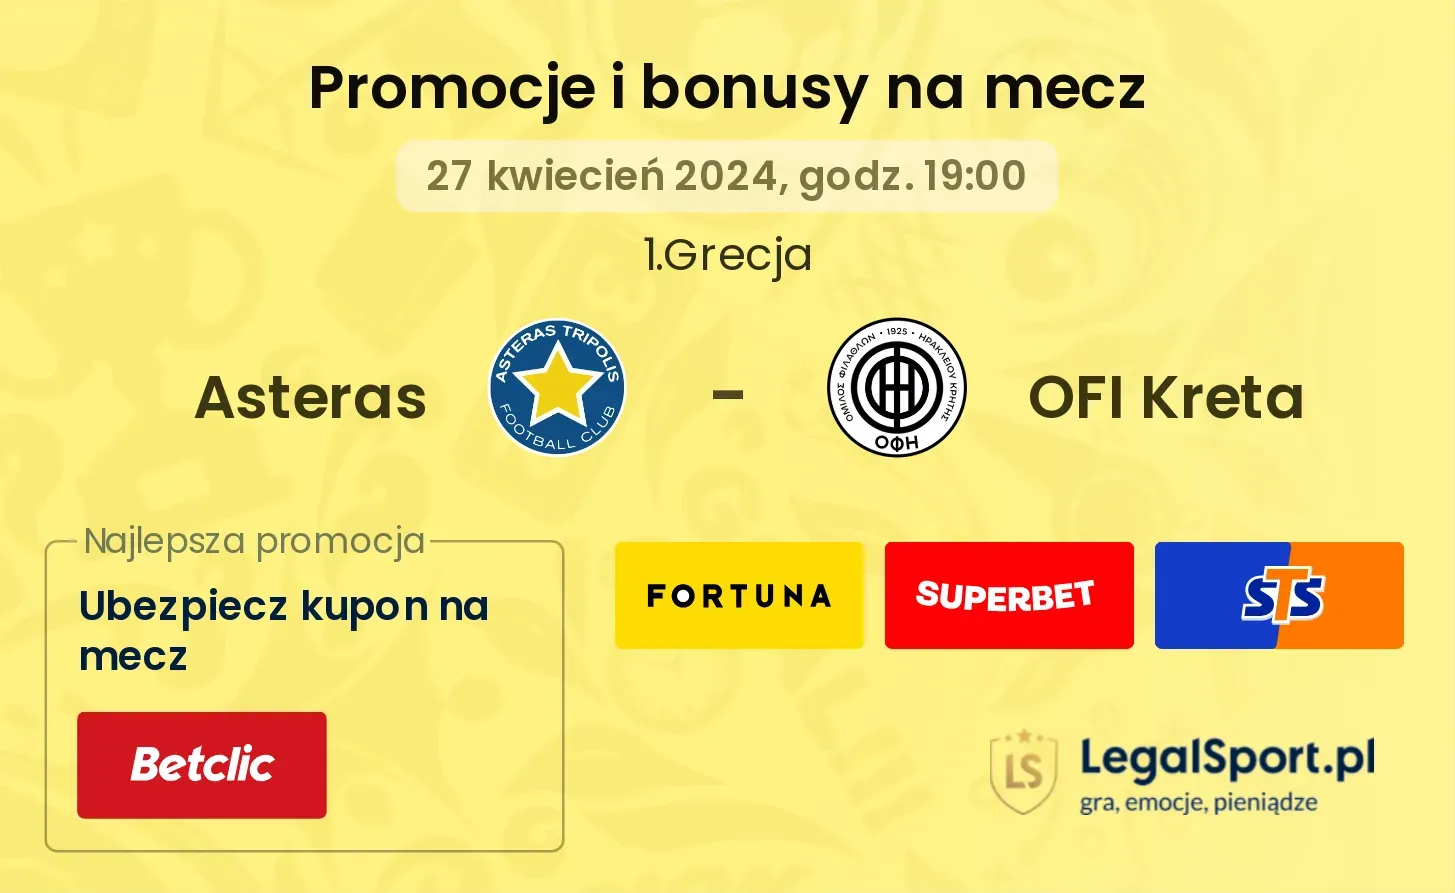 Asteras - OFI Kreta promocje bonusy na mecz